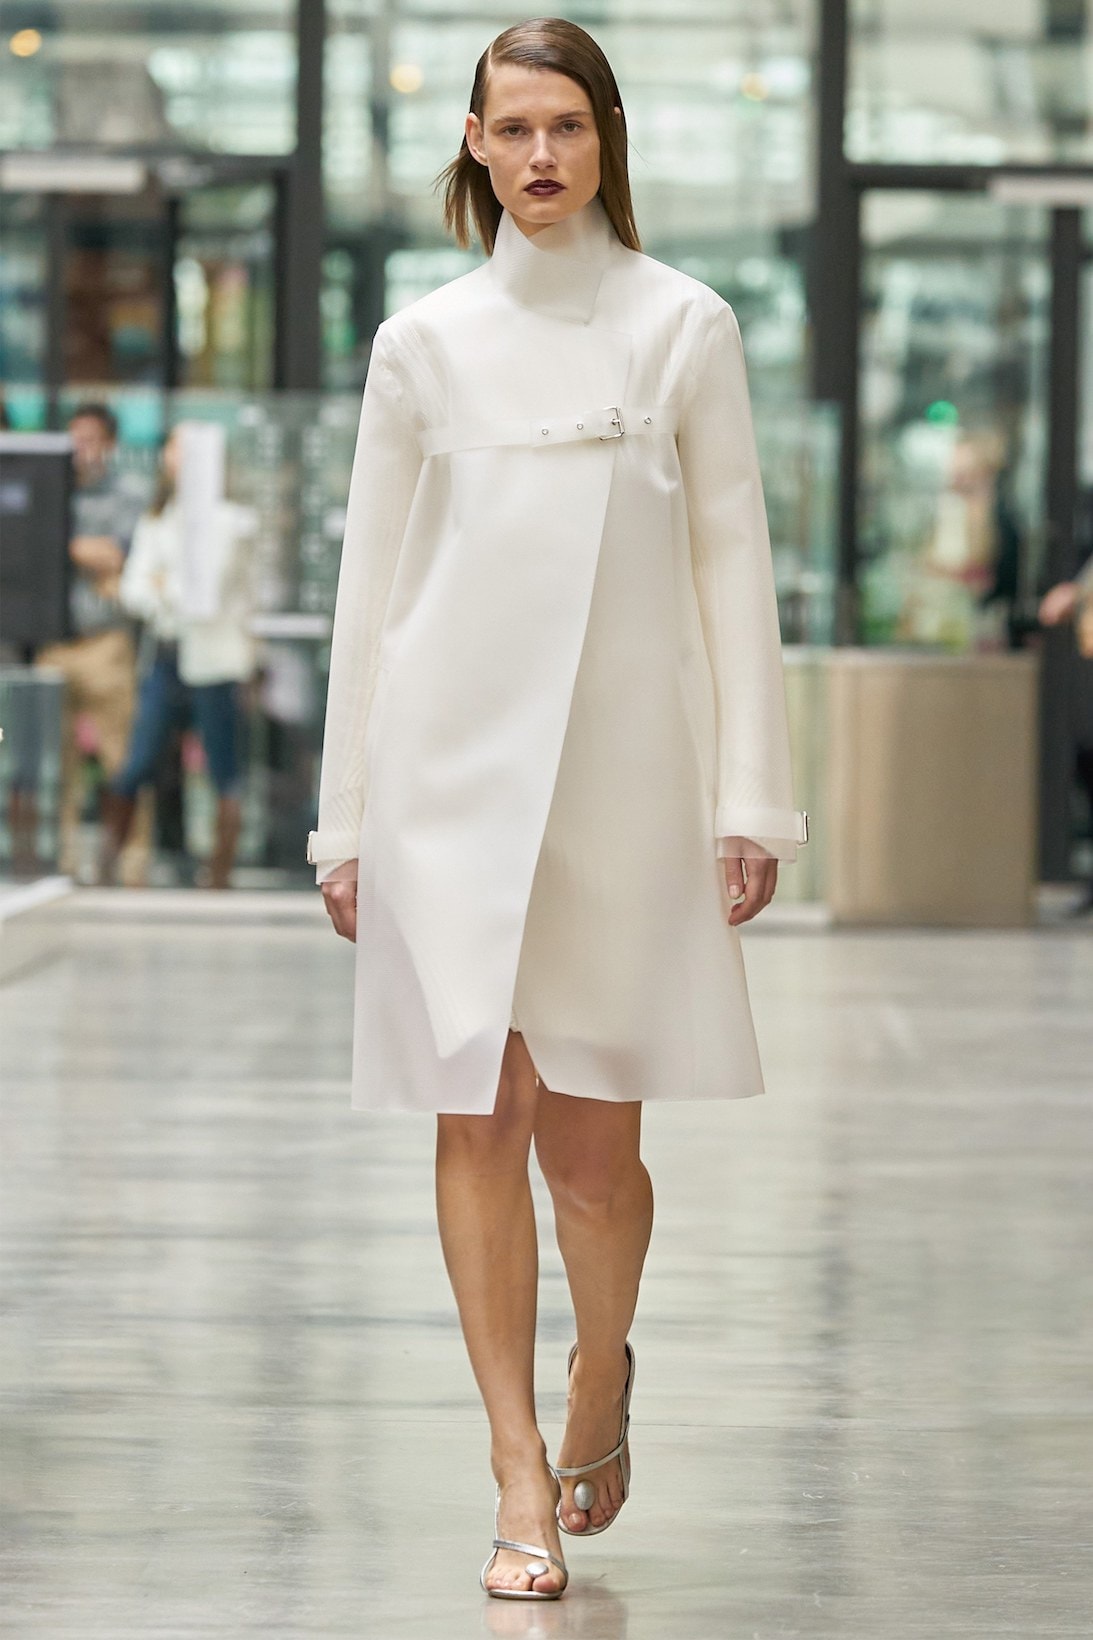 coperni sebastien meyer arnaud vaillant paris fashion week fall winter collection white long sleeve dress